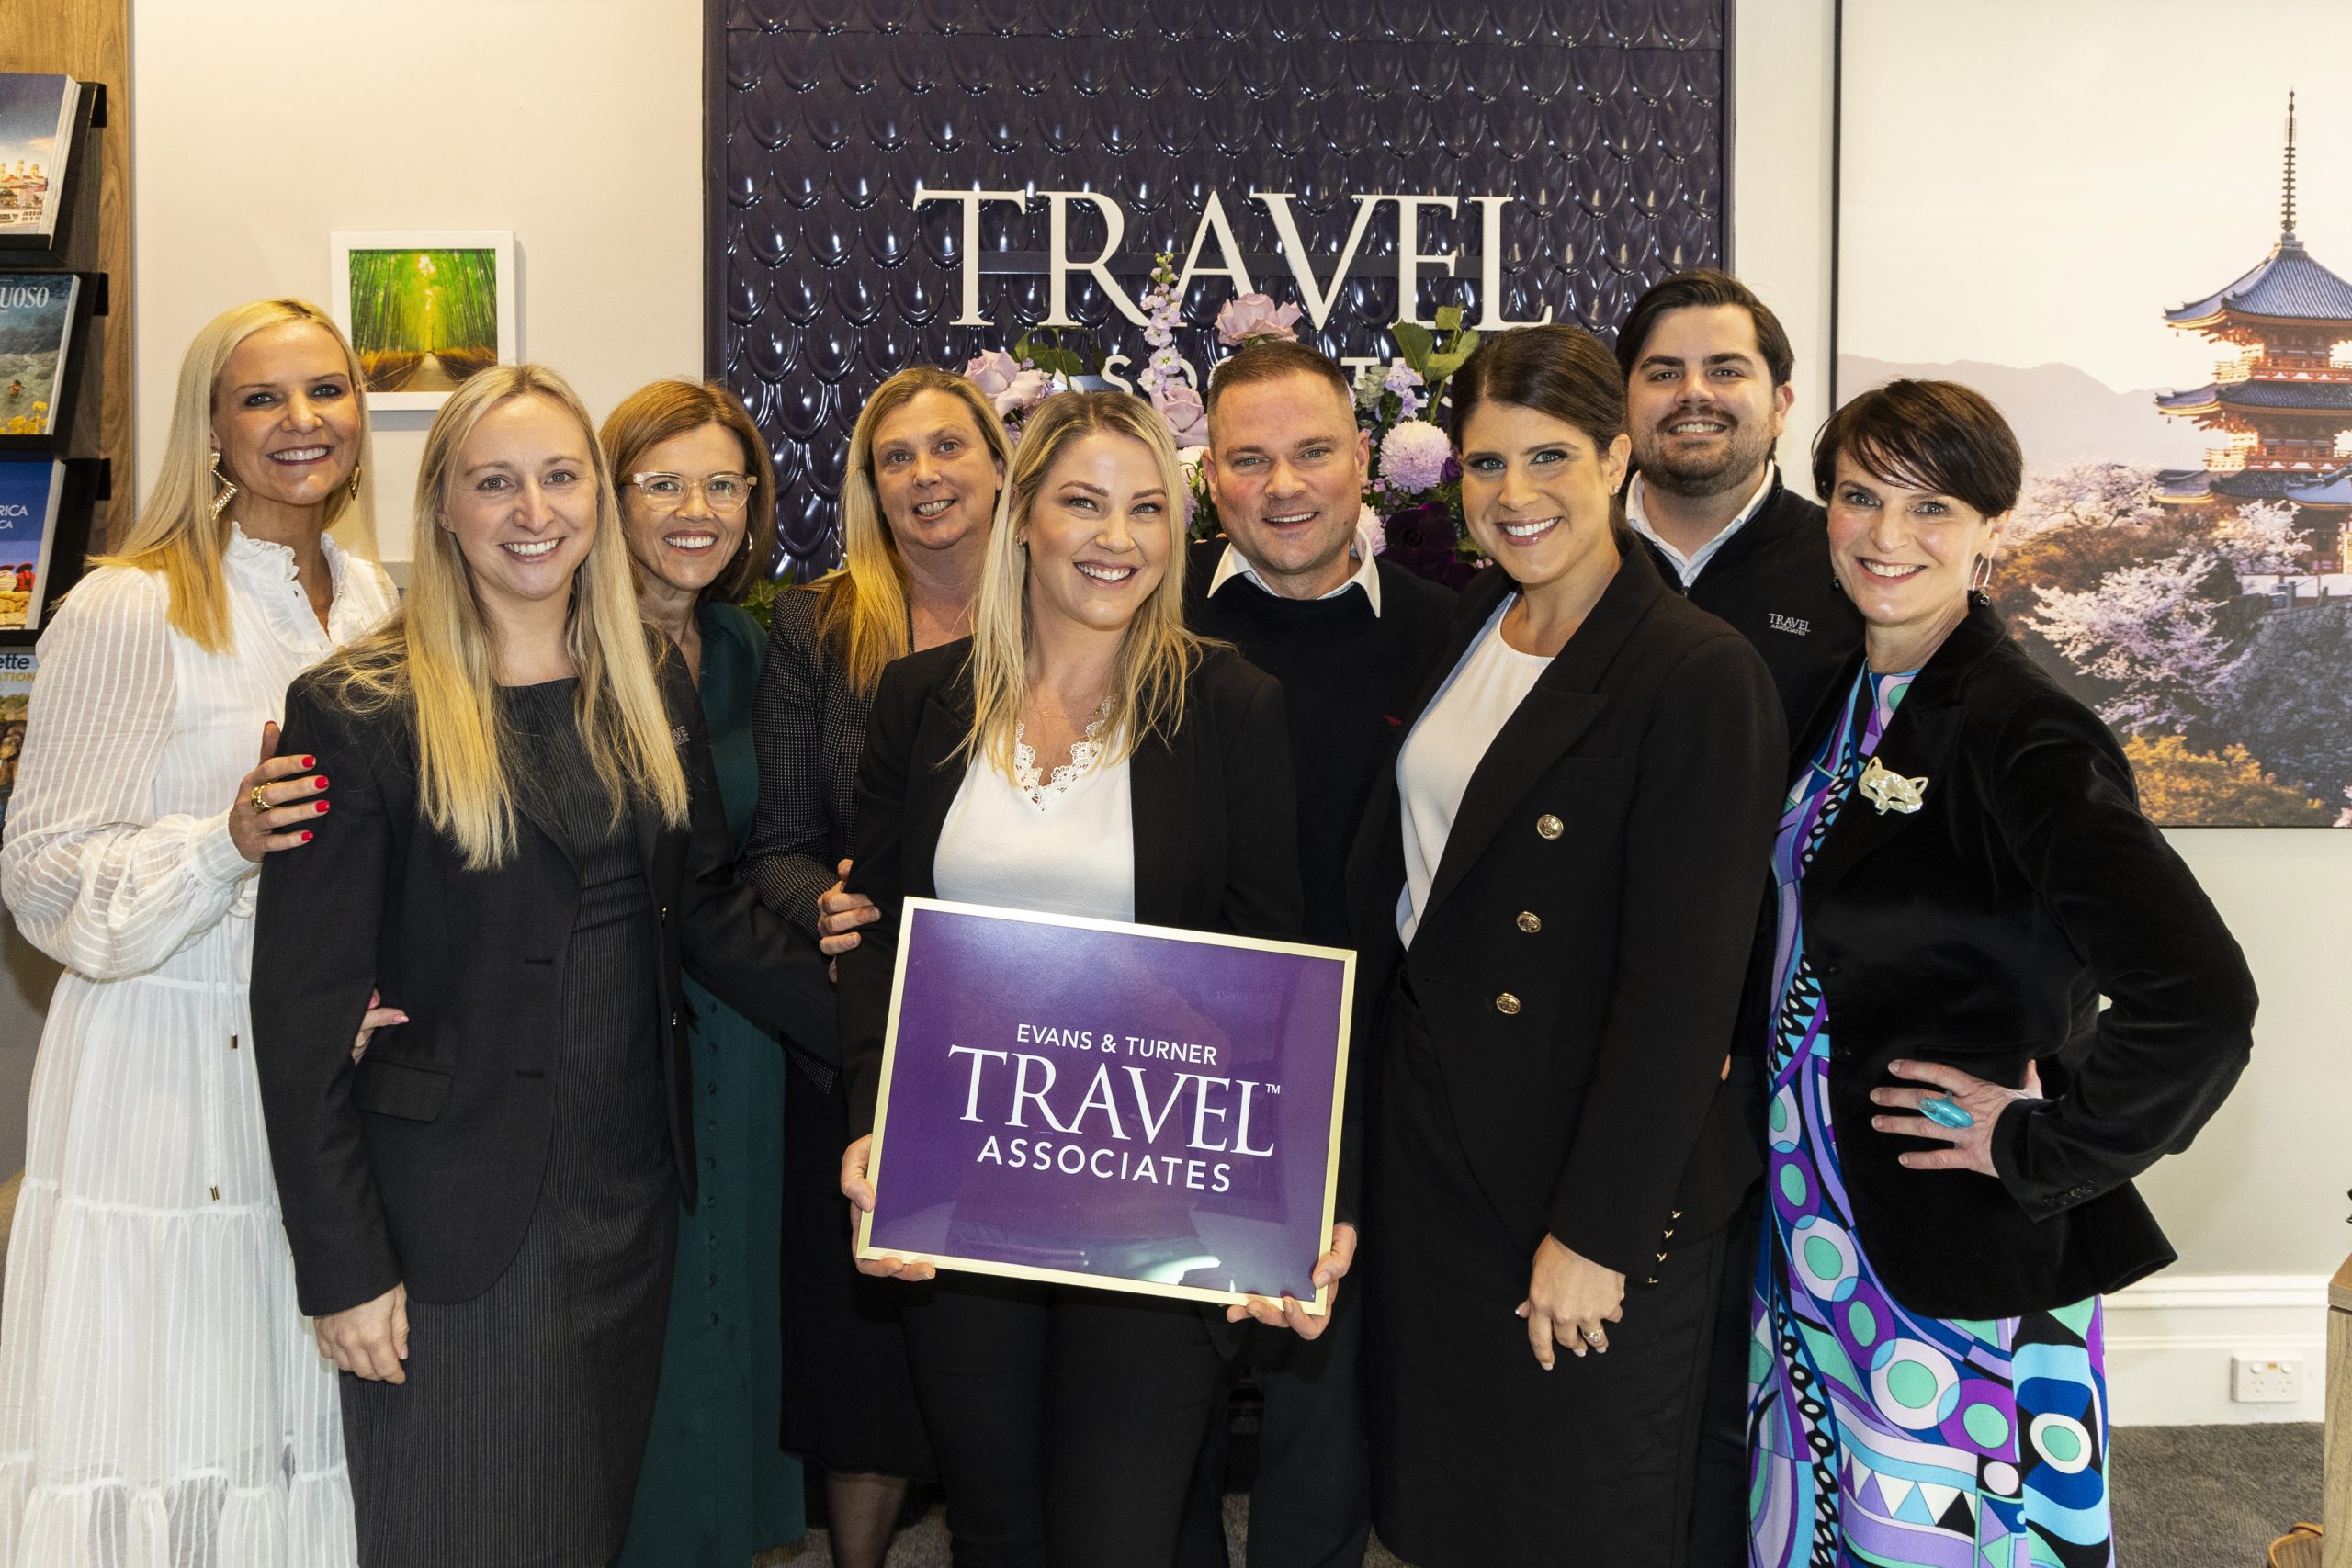 yee & turner travel associates